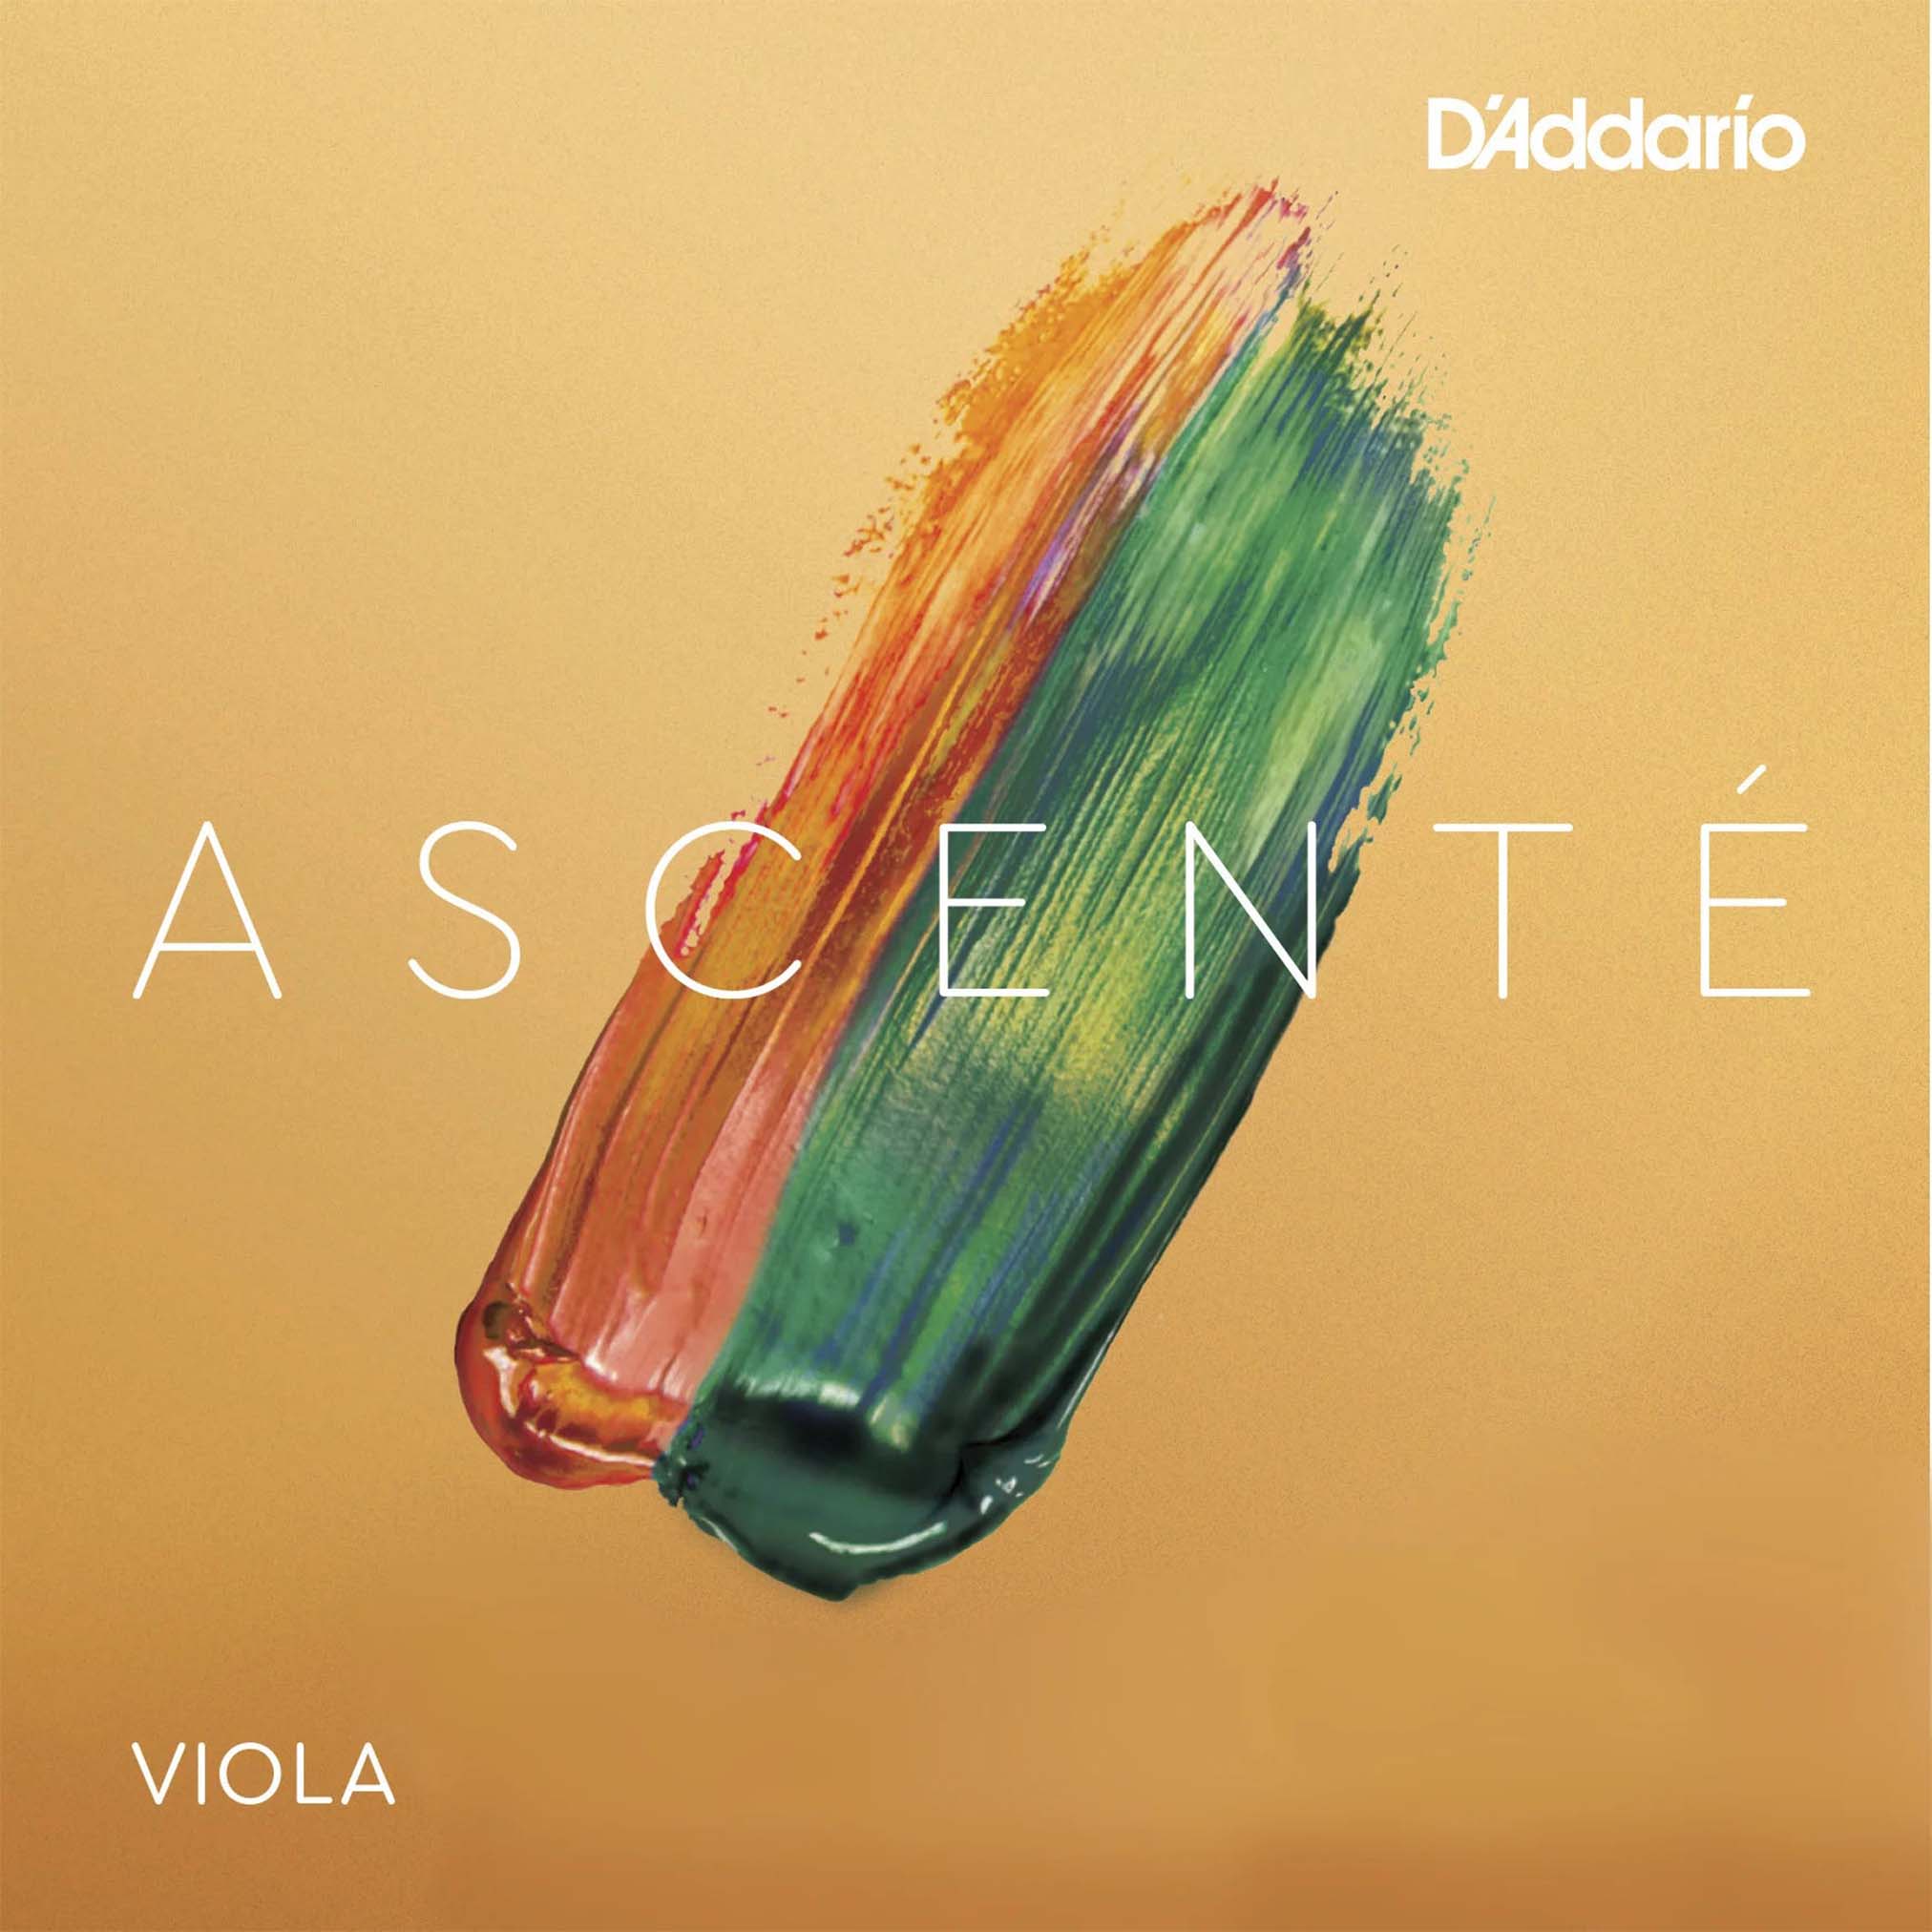 D'addario Ascenté Viola D String